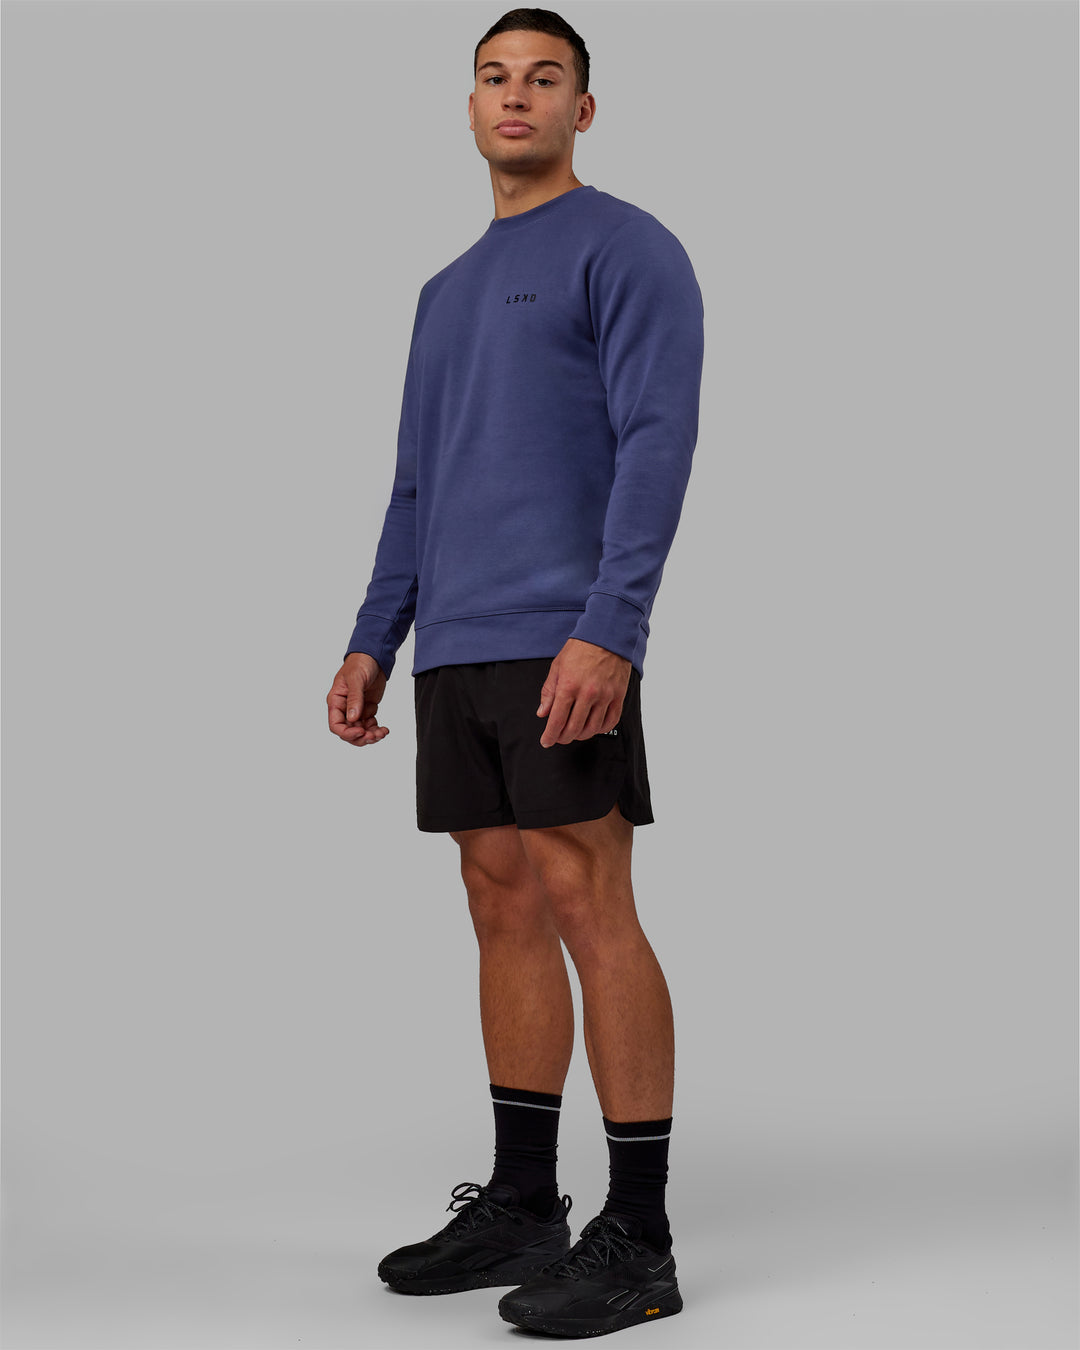 Man wearing Athlete ForgedFleece Sweater - Future Dusk